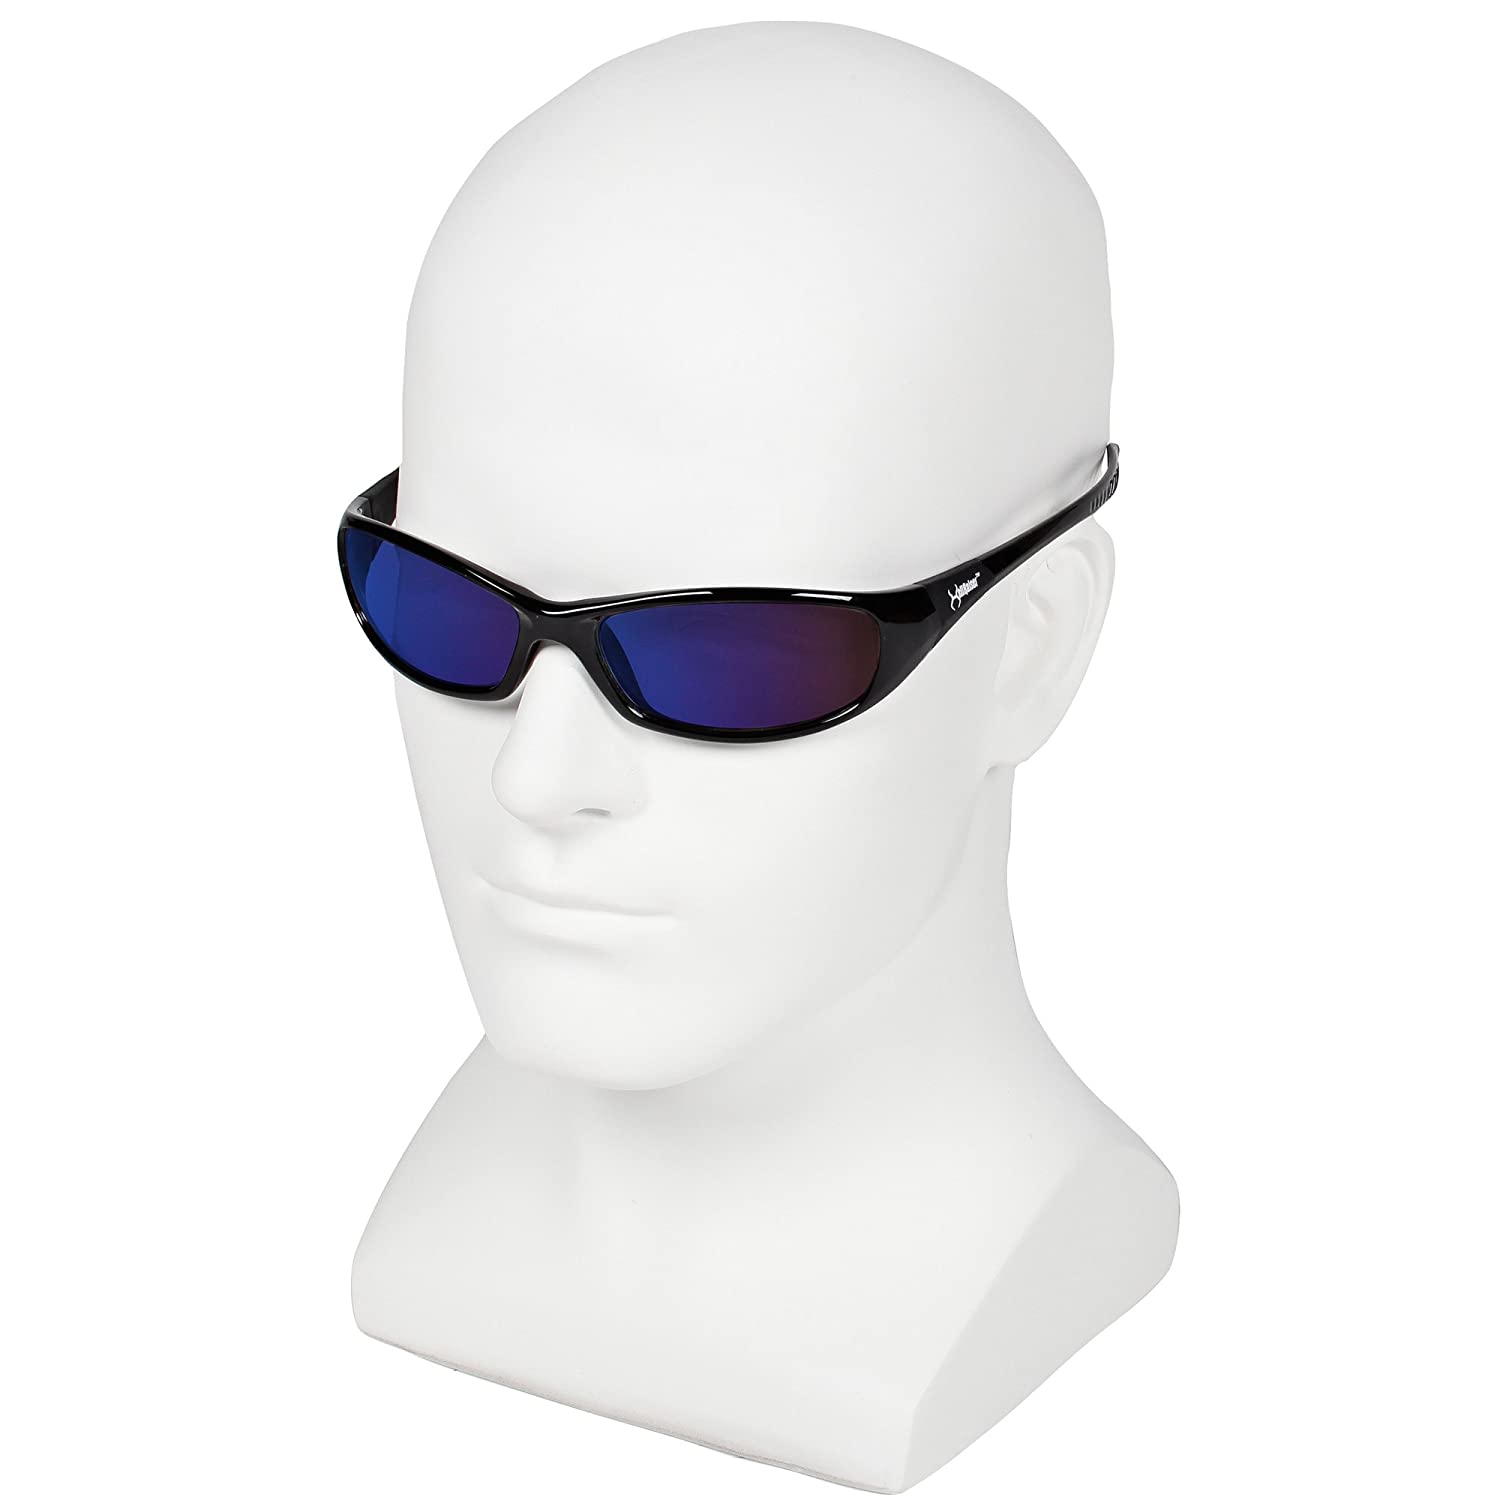 V40 Hellraiser* Safety Eyewear, Blue Mirror Lens, Anti-Scratch, Black Frame - image 3 of 5